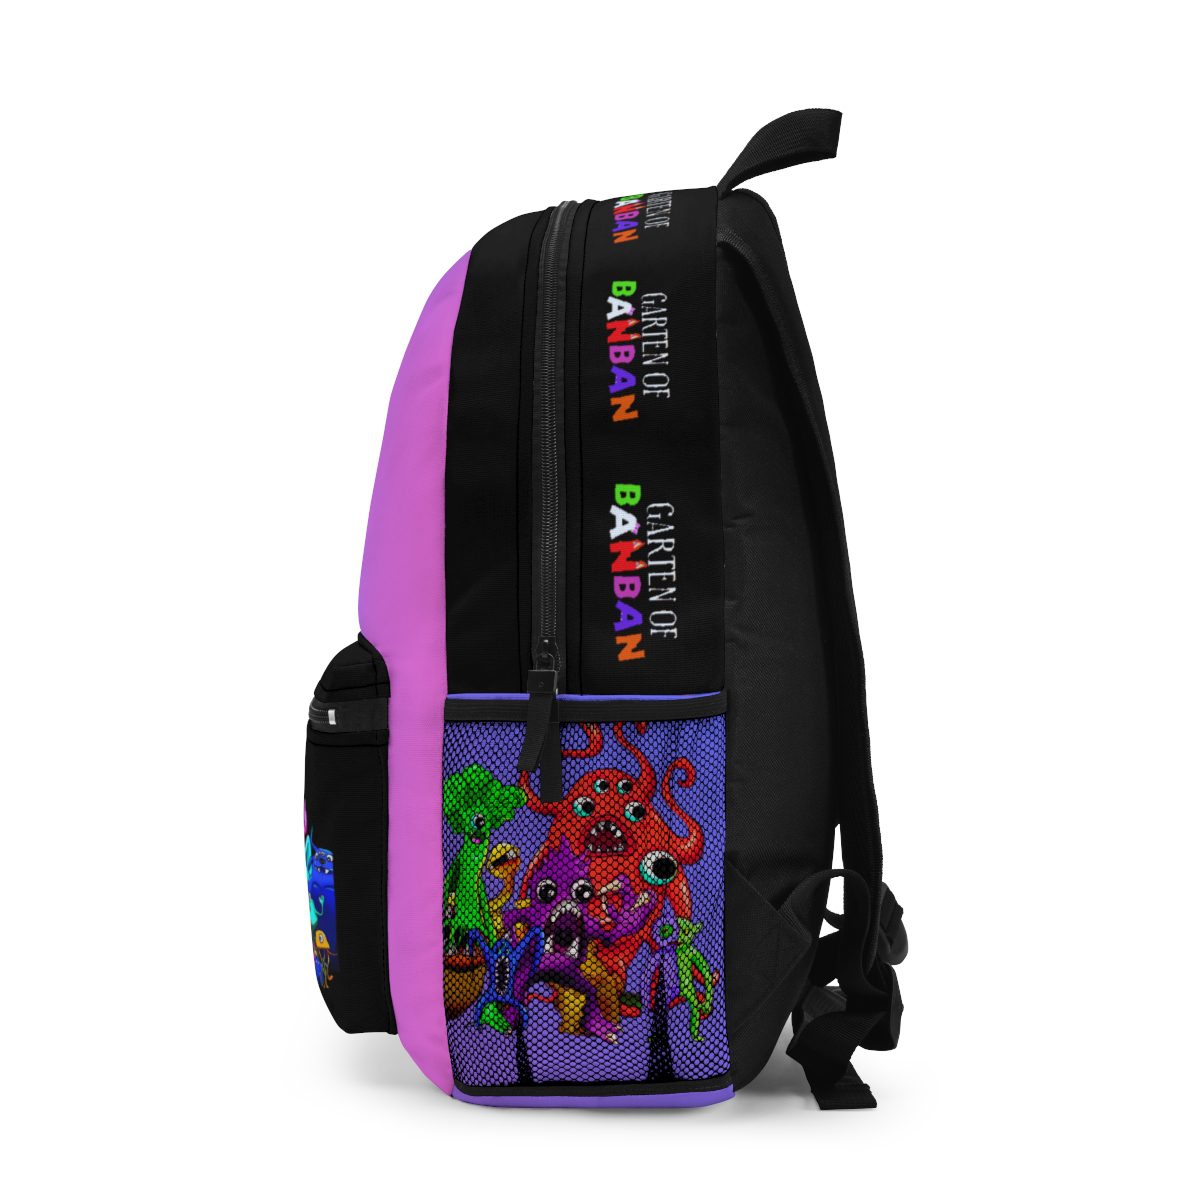 Garten of BanBan, Black and Purple Backpack Cool Kiddo 14